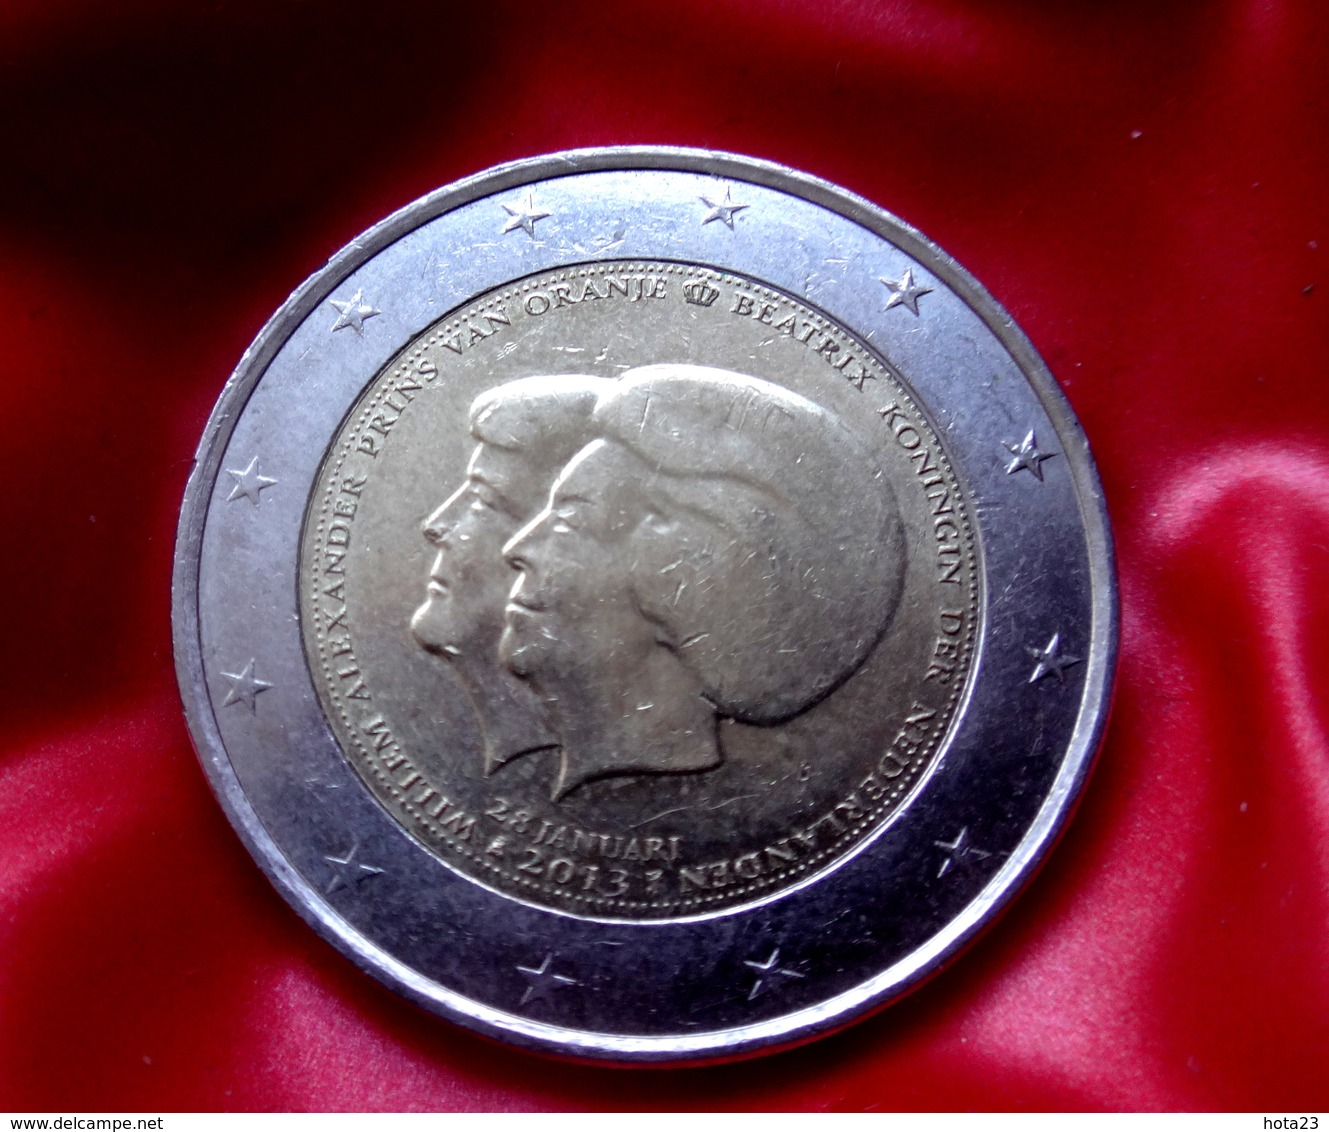 NEDERLAND 2013 2€ Euro Bi-metallic Commemorative  Reine Béatrix Prince Willem Alexander  Coin  CIRCULATED - Niederlande